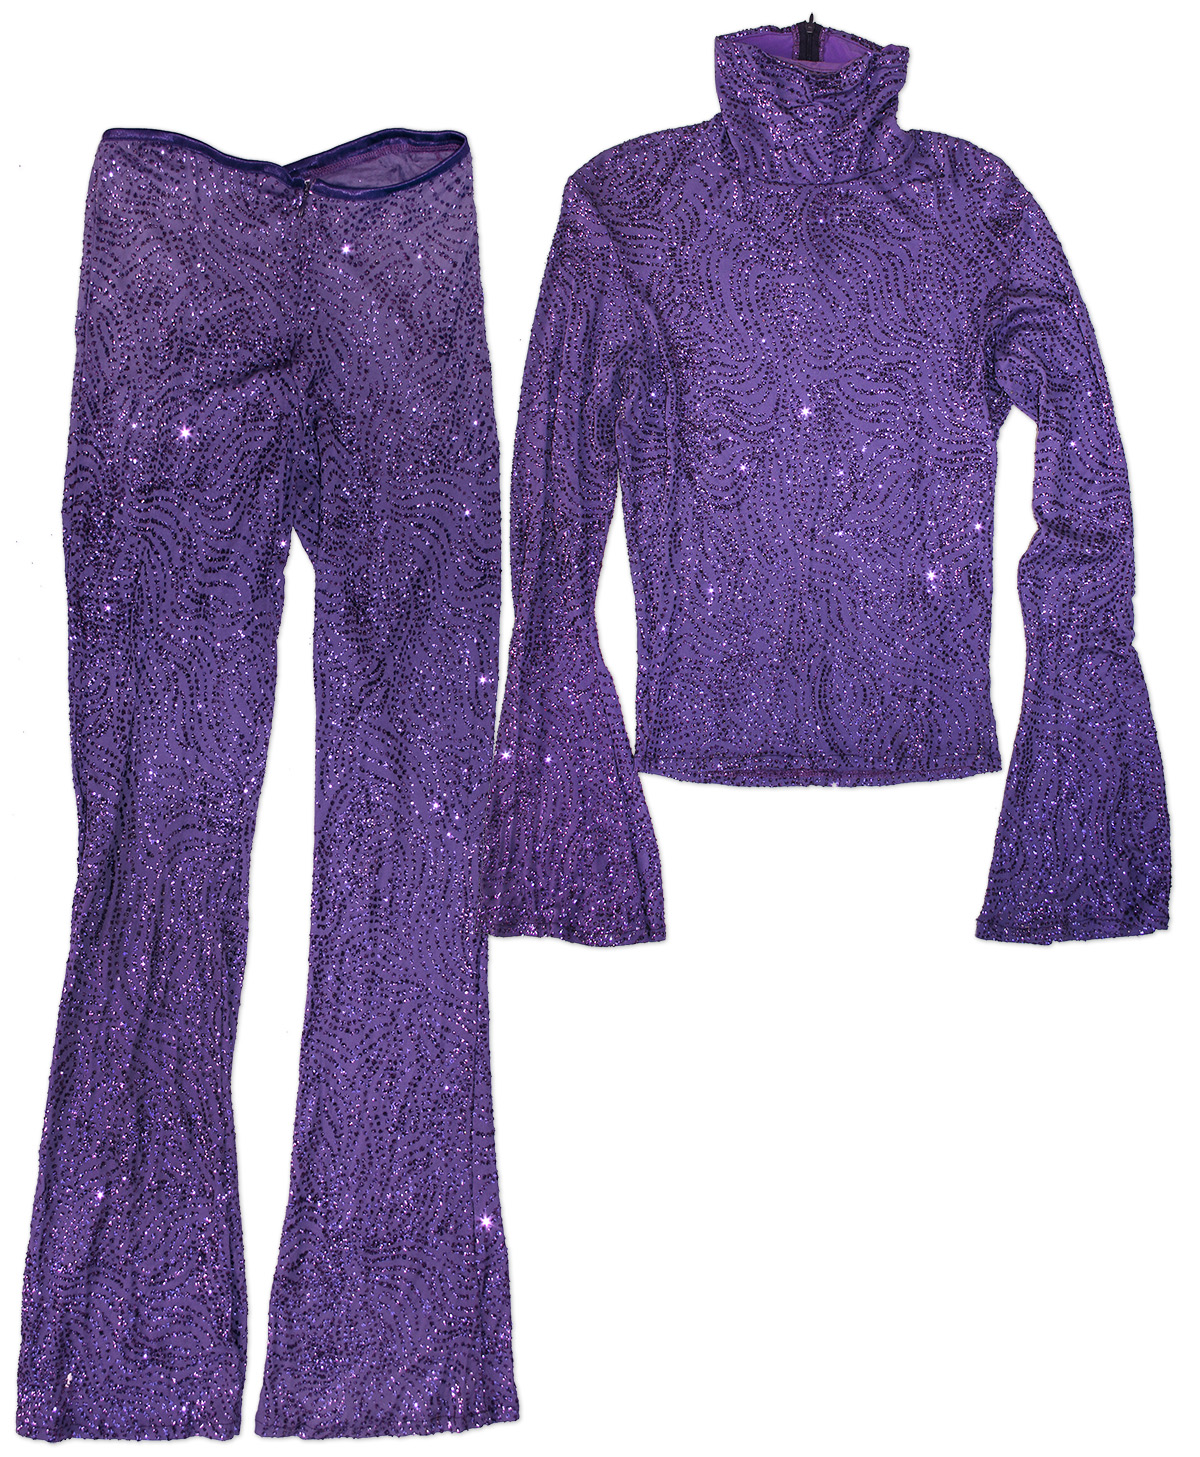 Prince worn shirt Prince Worn Purple Costume -- Flashy Stage Costume in His Trademark Color